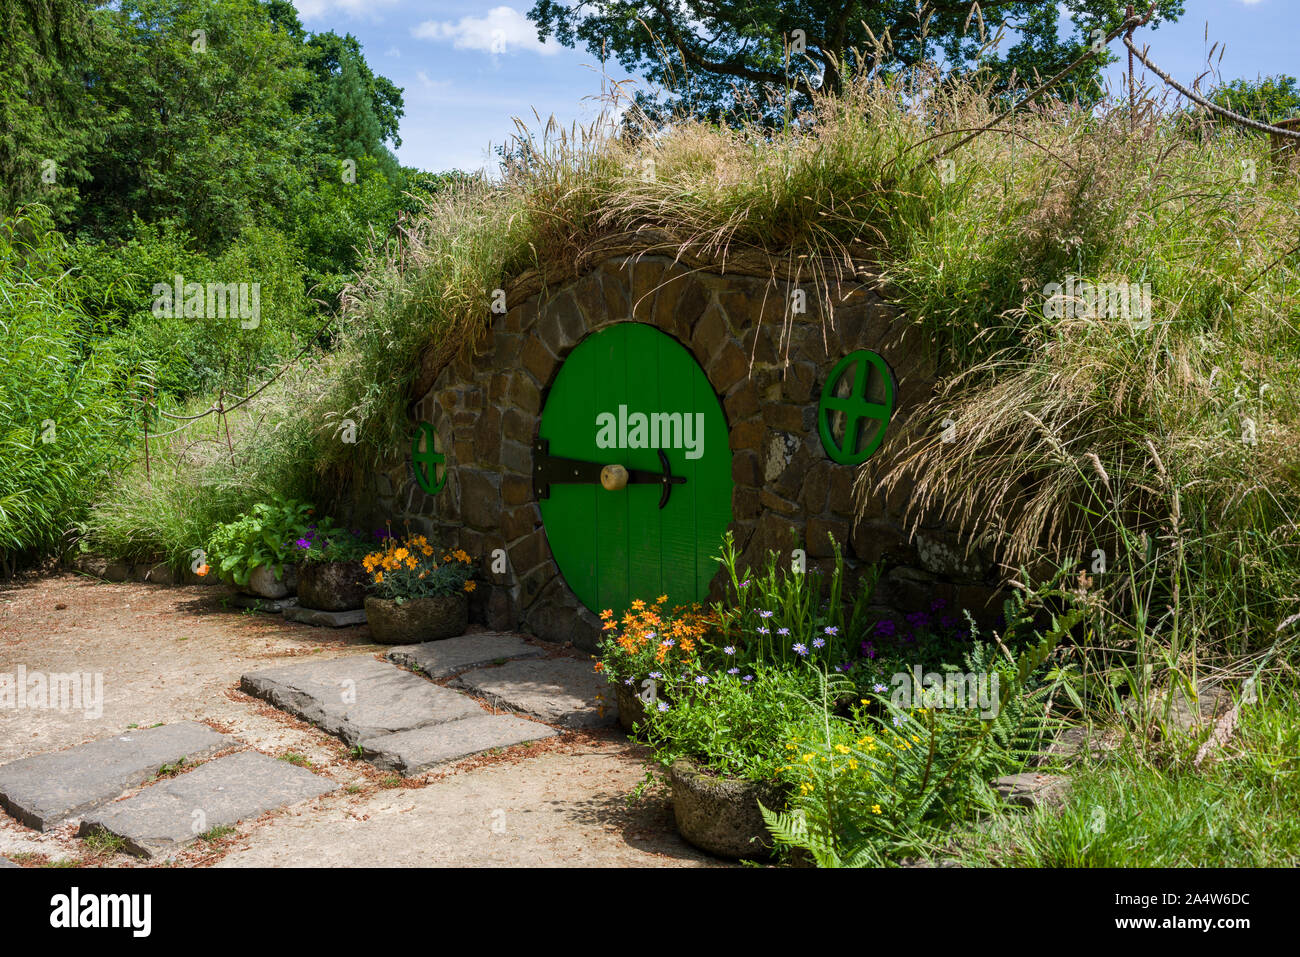 A hobbit inspired garden at RHS Rosemoor in summer near Great Torrington, Devon, England. Stock Photo